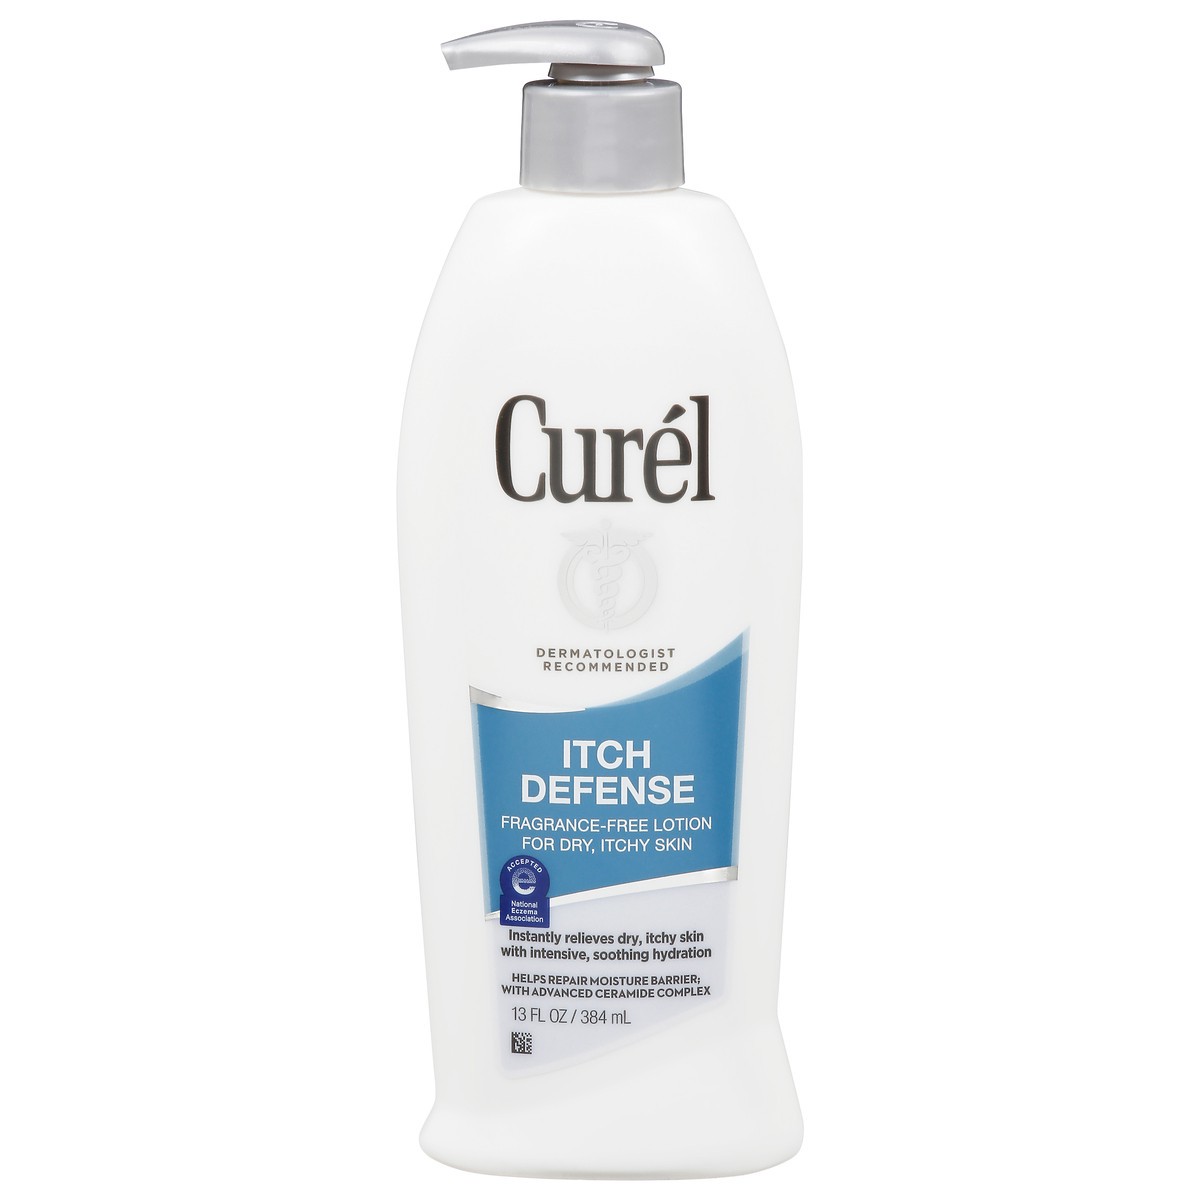 slide 10 of 10, Curél Itch Defense Dry, Itchy Skin Fragrance-Free Lotion, 13 fl oz